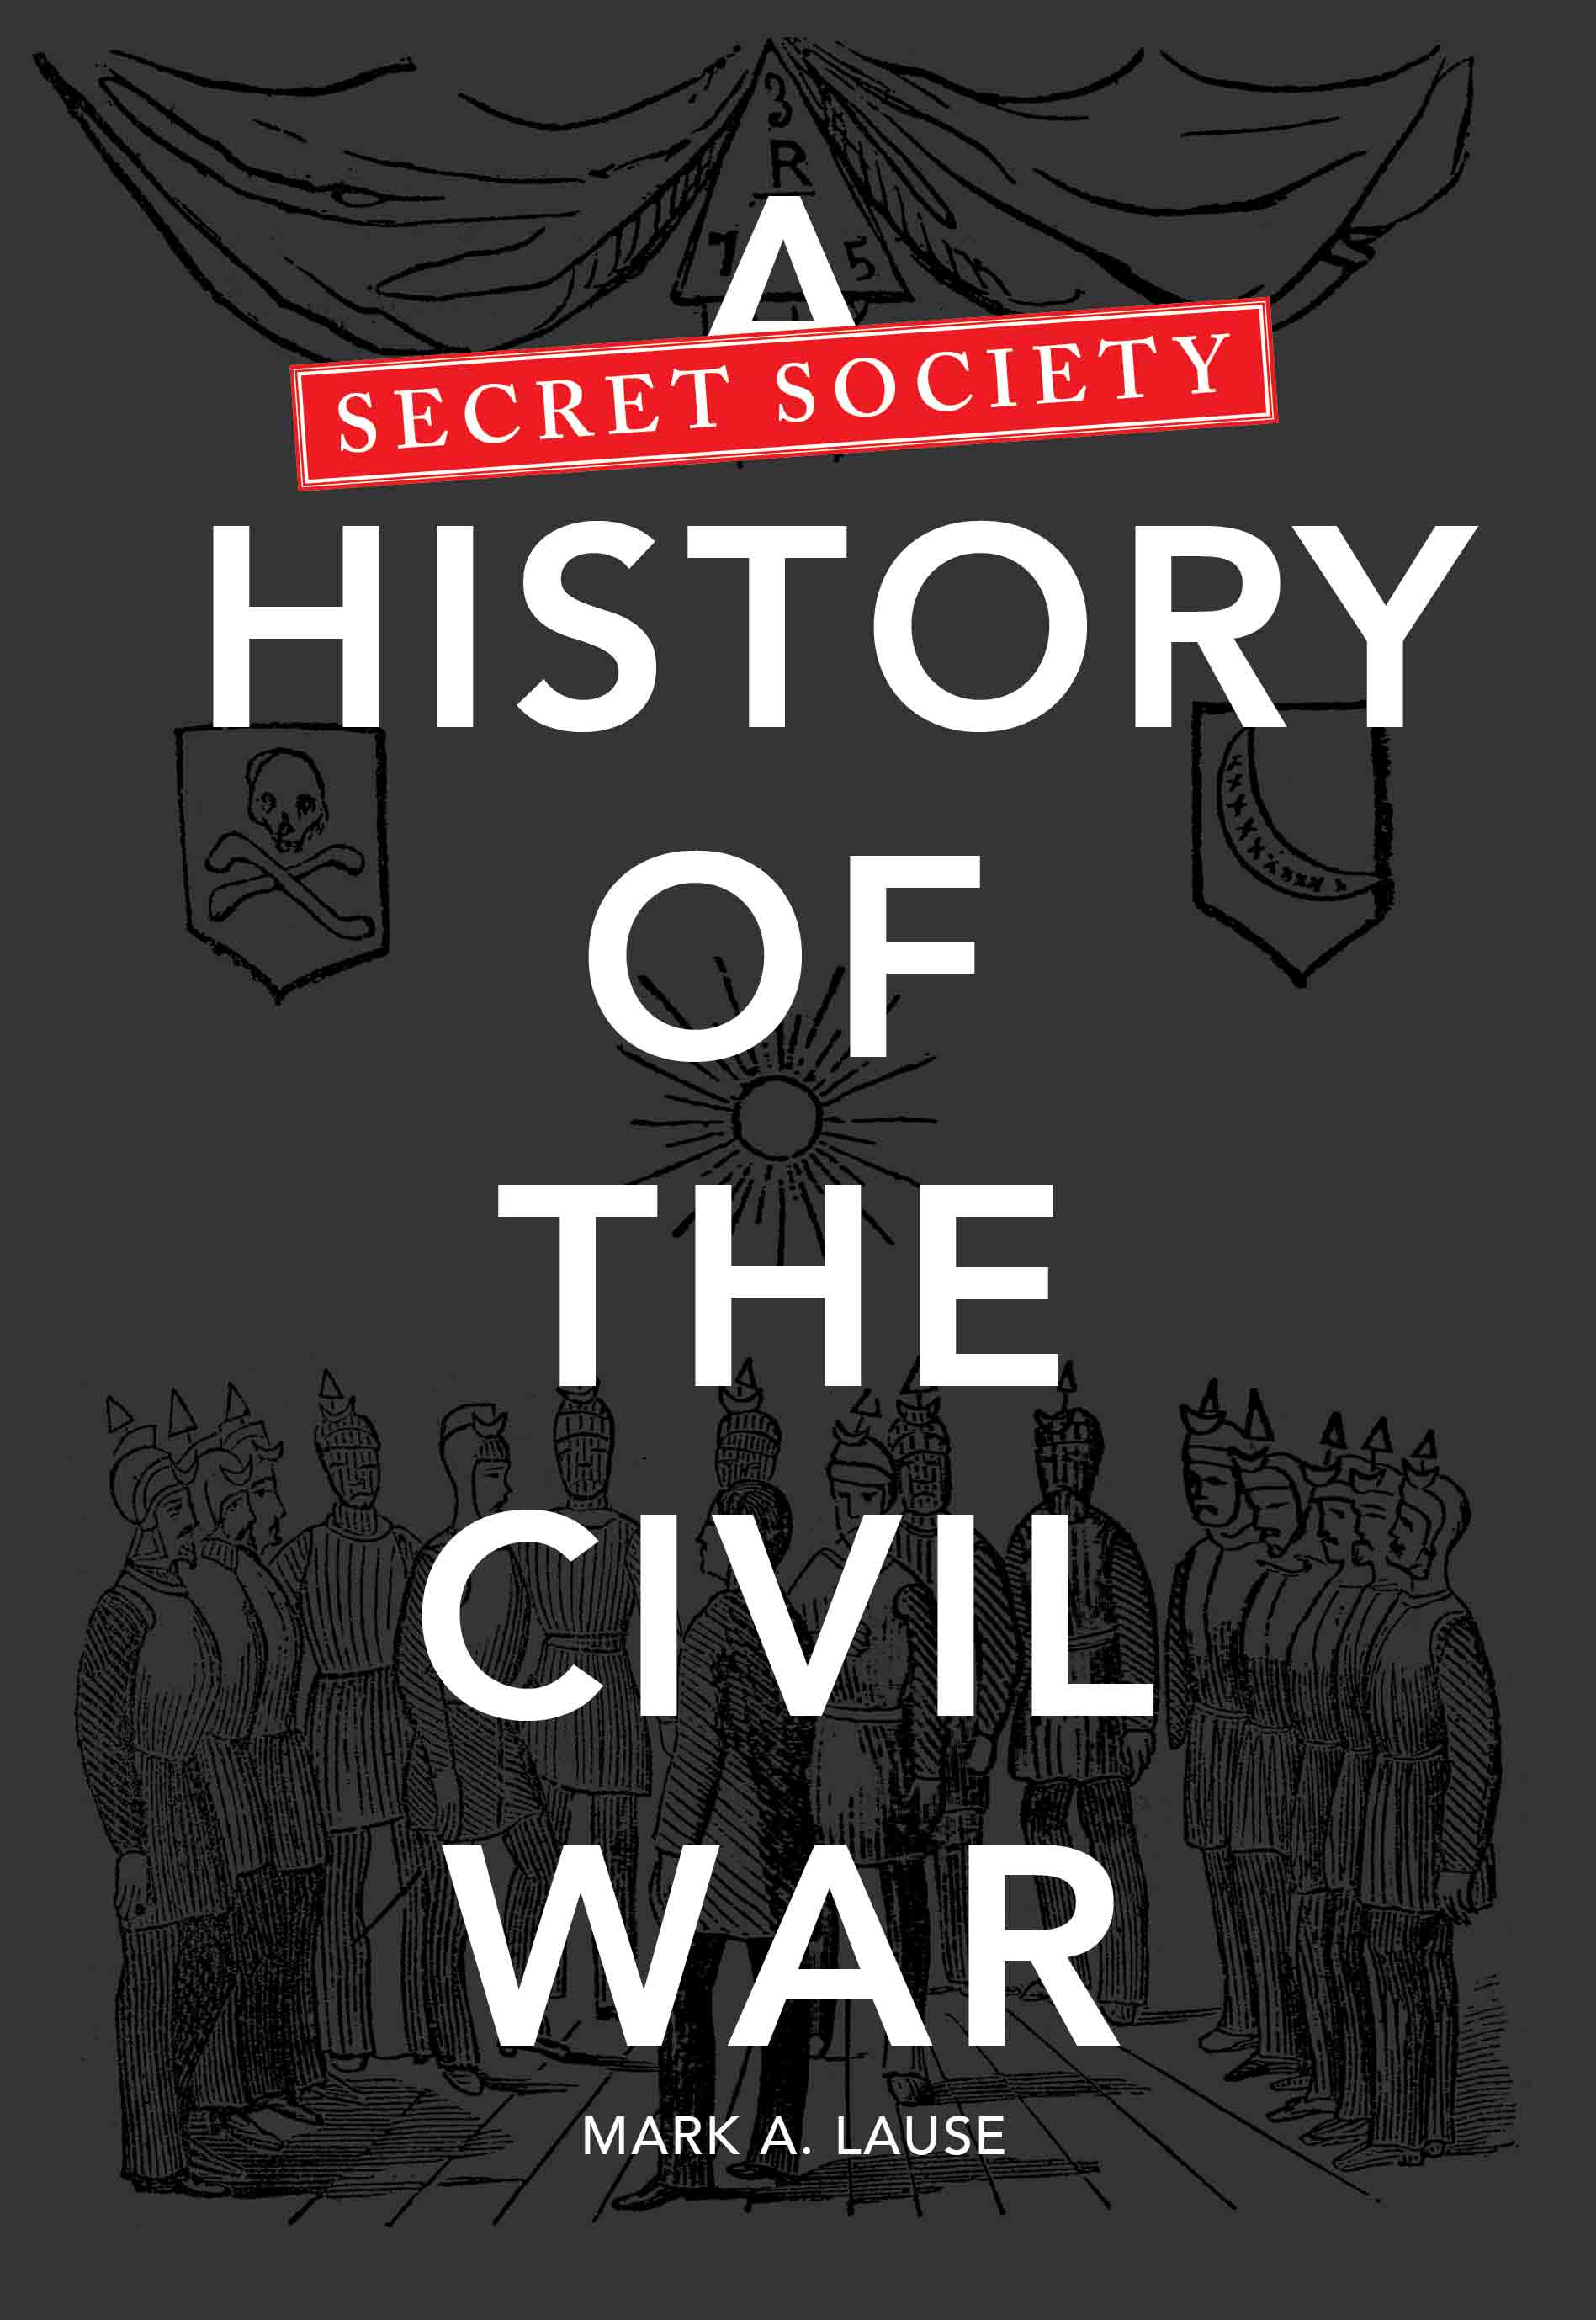 A Secret Society History